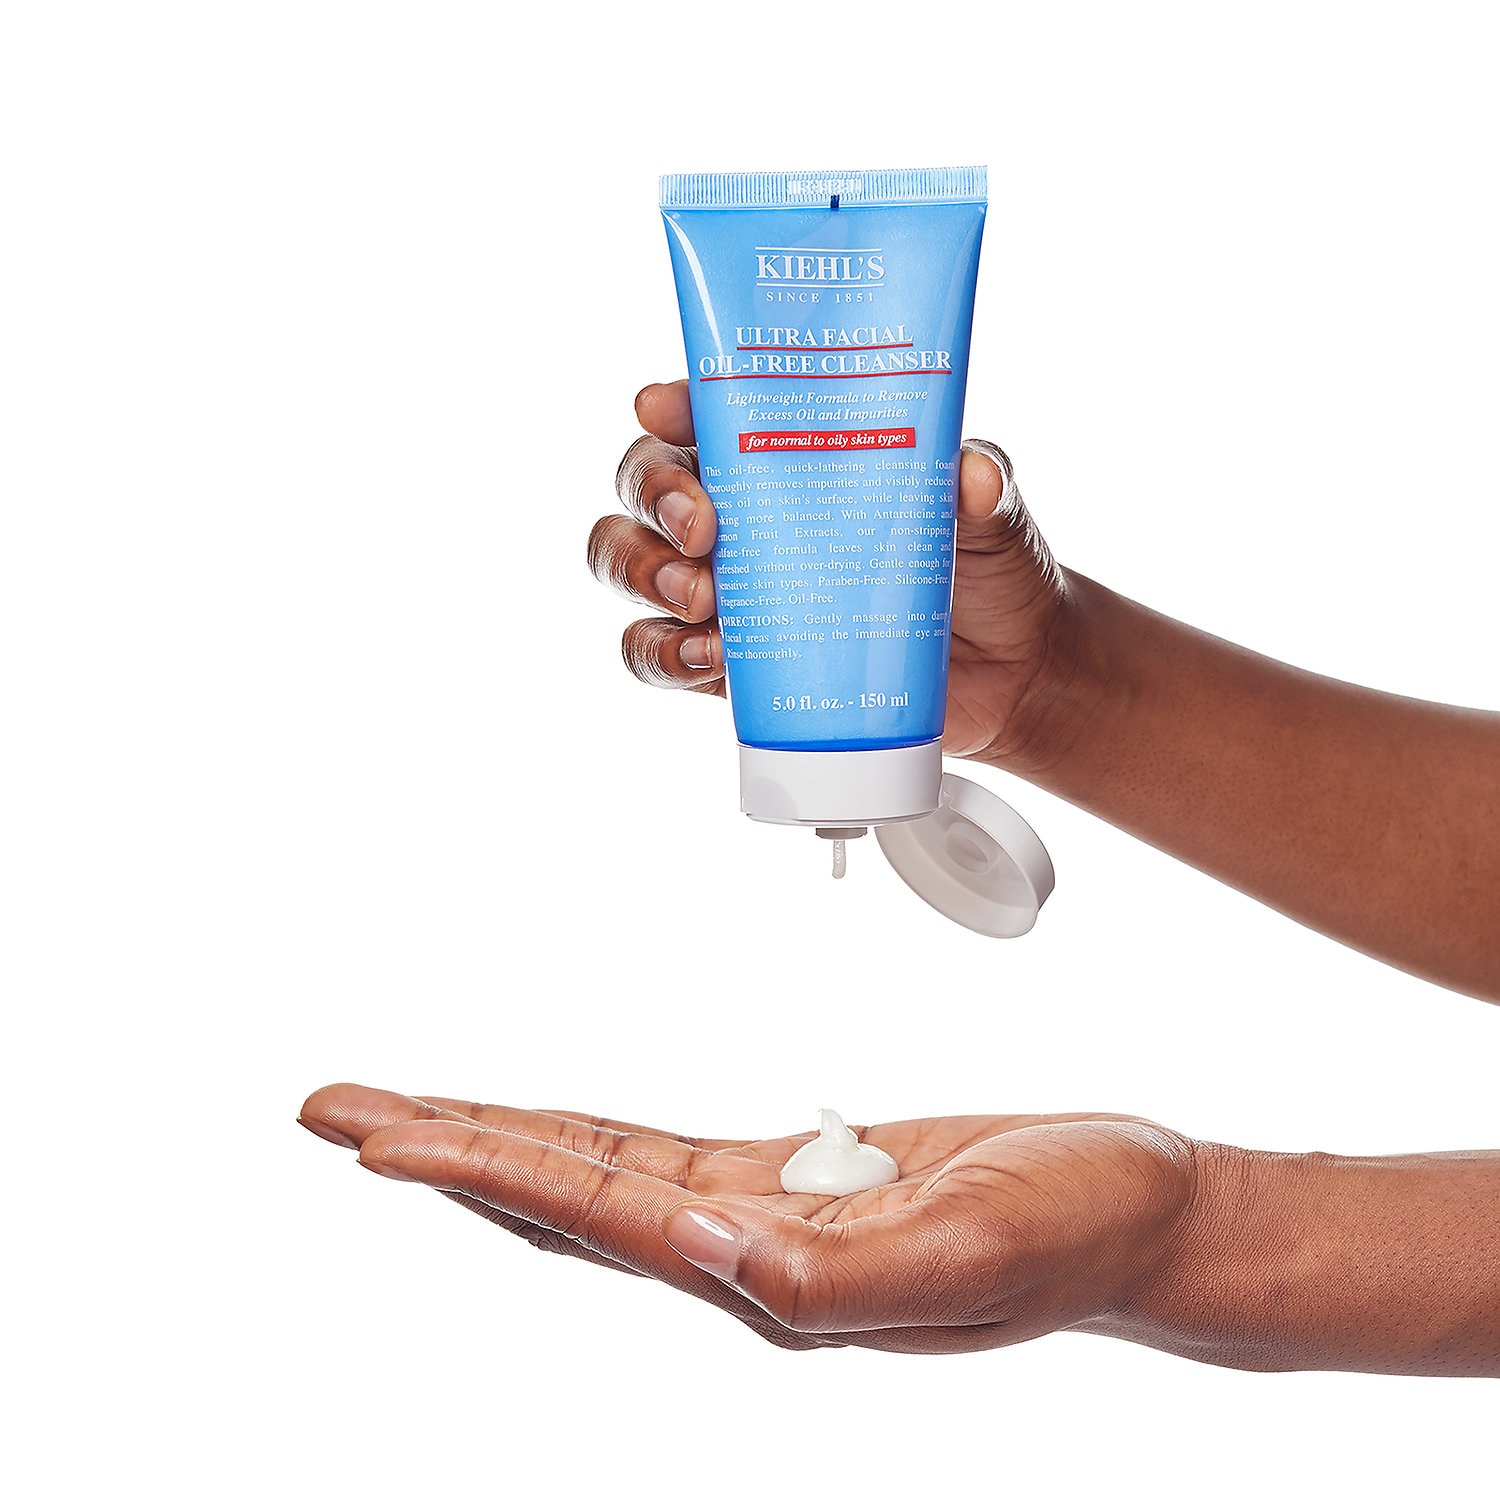 Sữa rửa mặt Kiehl's Facial Cleanser Oil-Free Cleanser 150ml